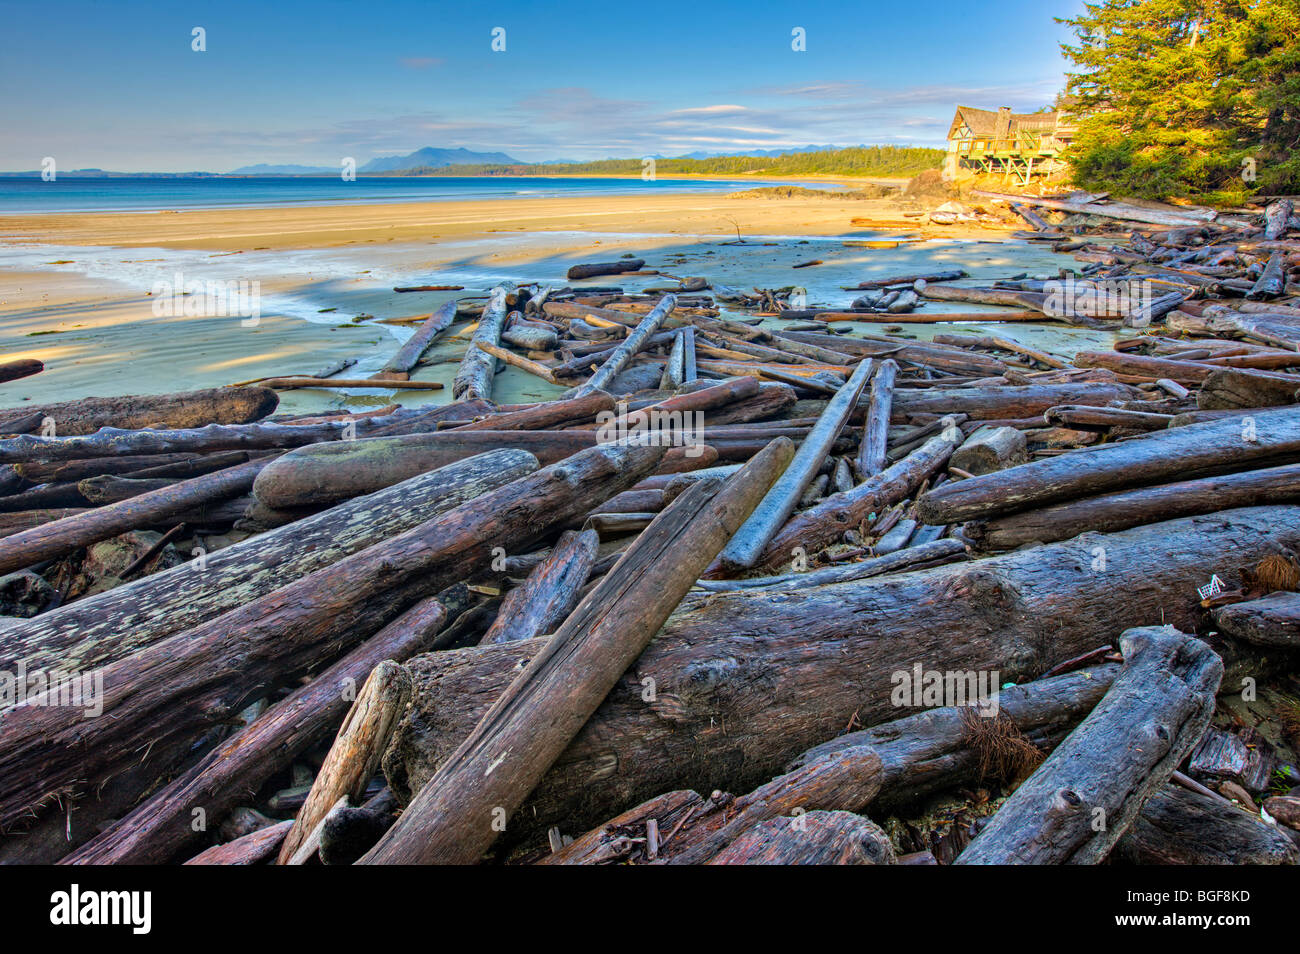 Wickaninnish Interpretive Center e driftwood disseminate lungo Wickaninnish Beach, Wickaninnish Bay, Pacific Rim National Park, Lon Foto Stock